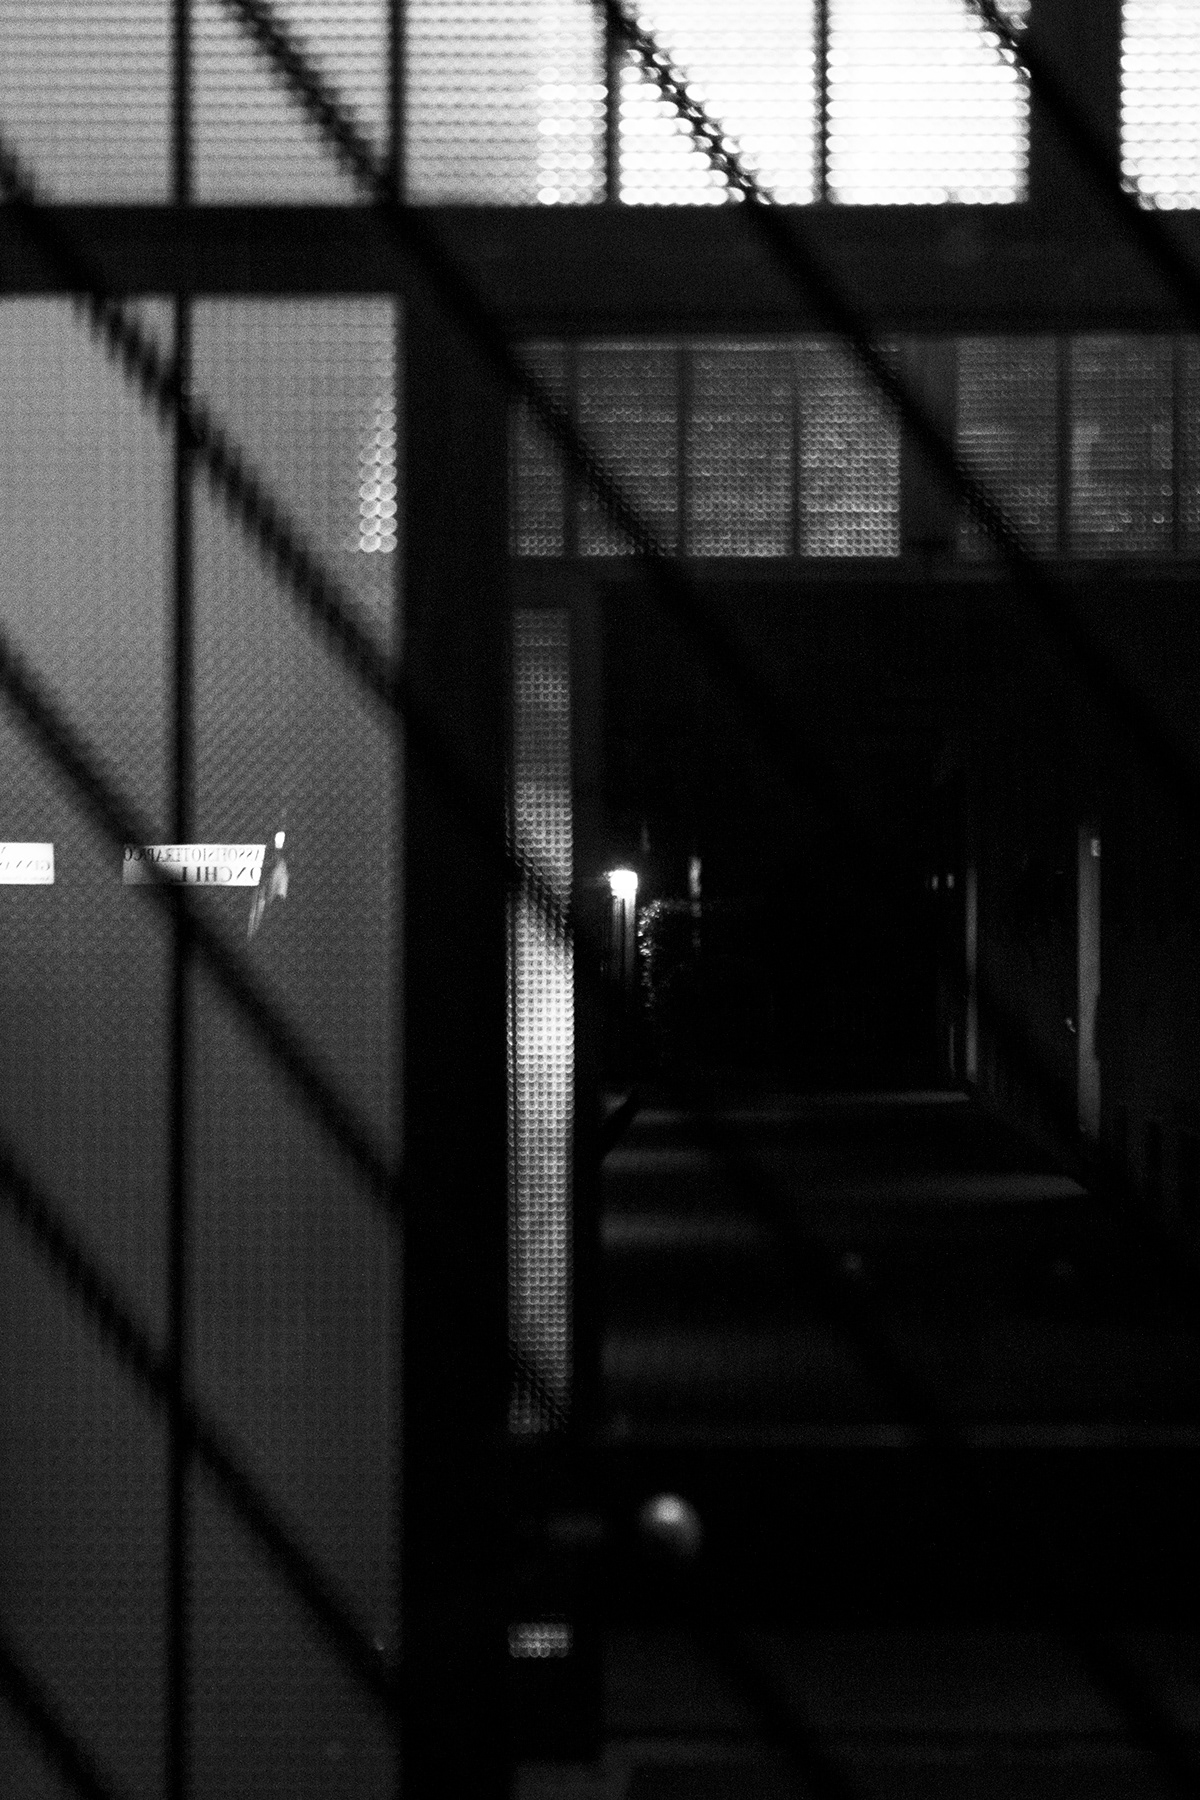 milan milano notte night Street street photography people person dream alone black and white b&w bianco e nero